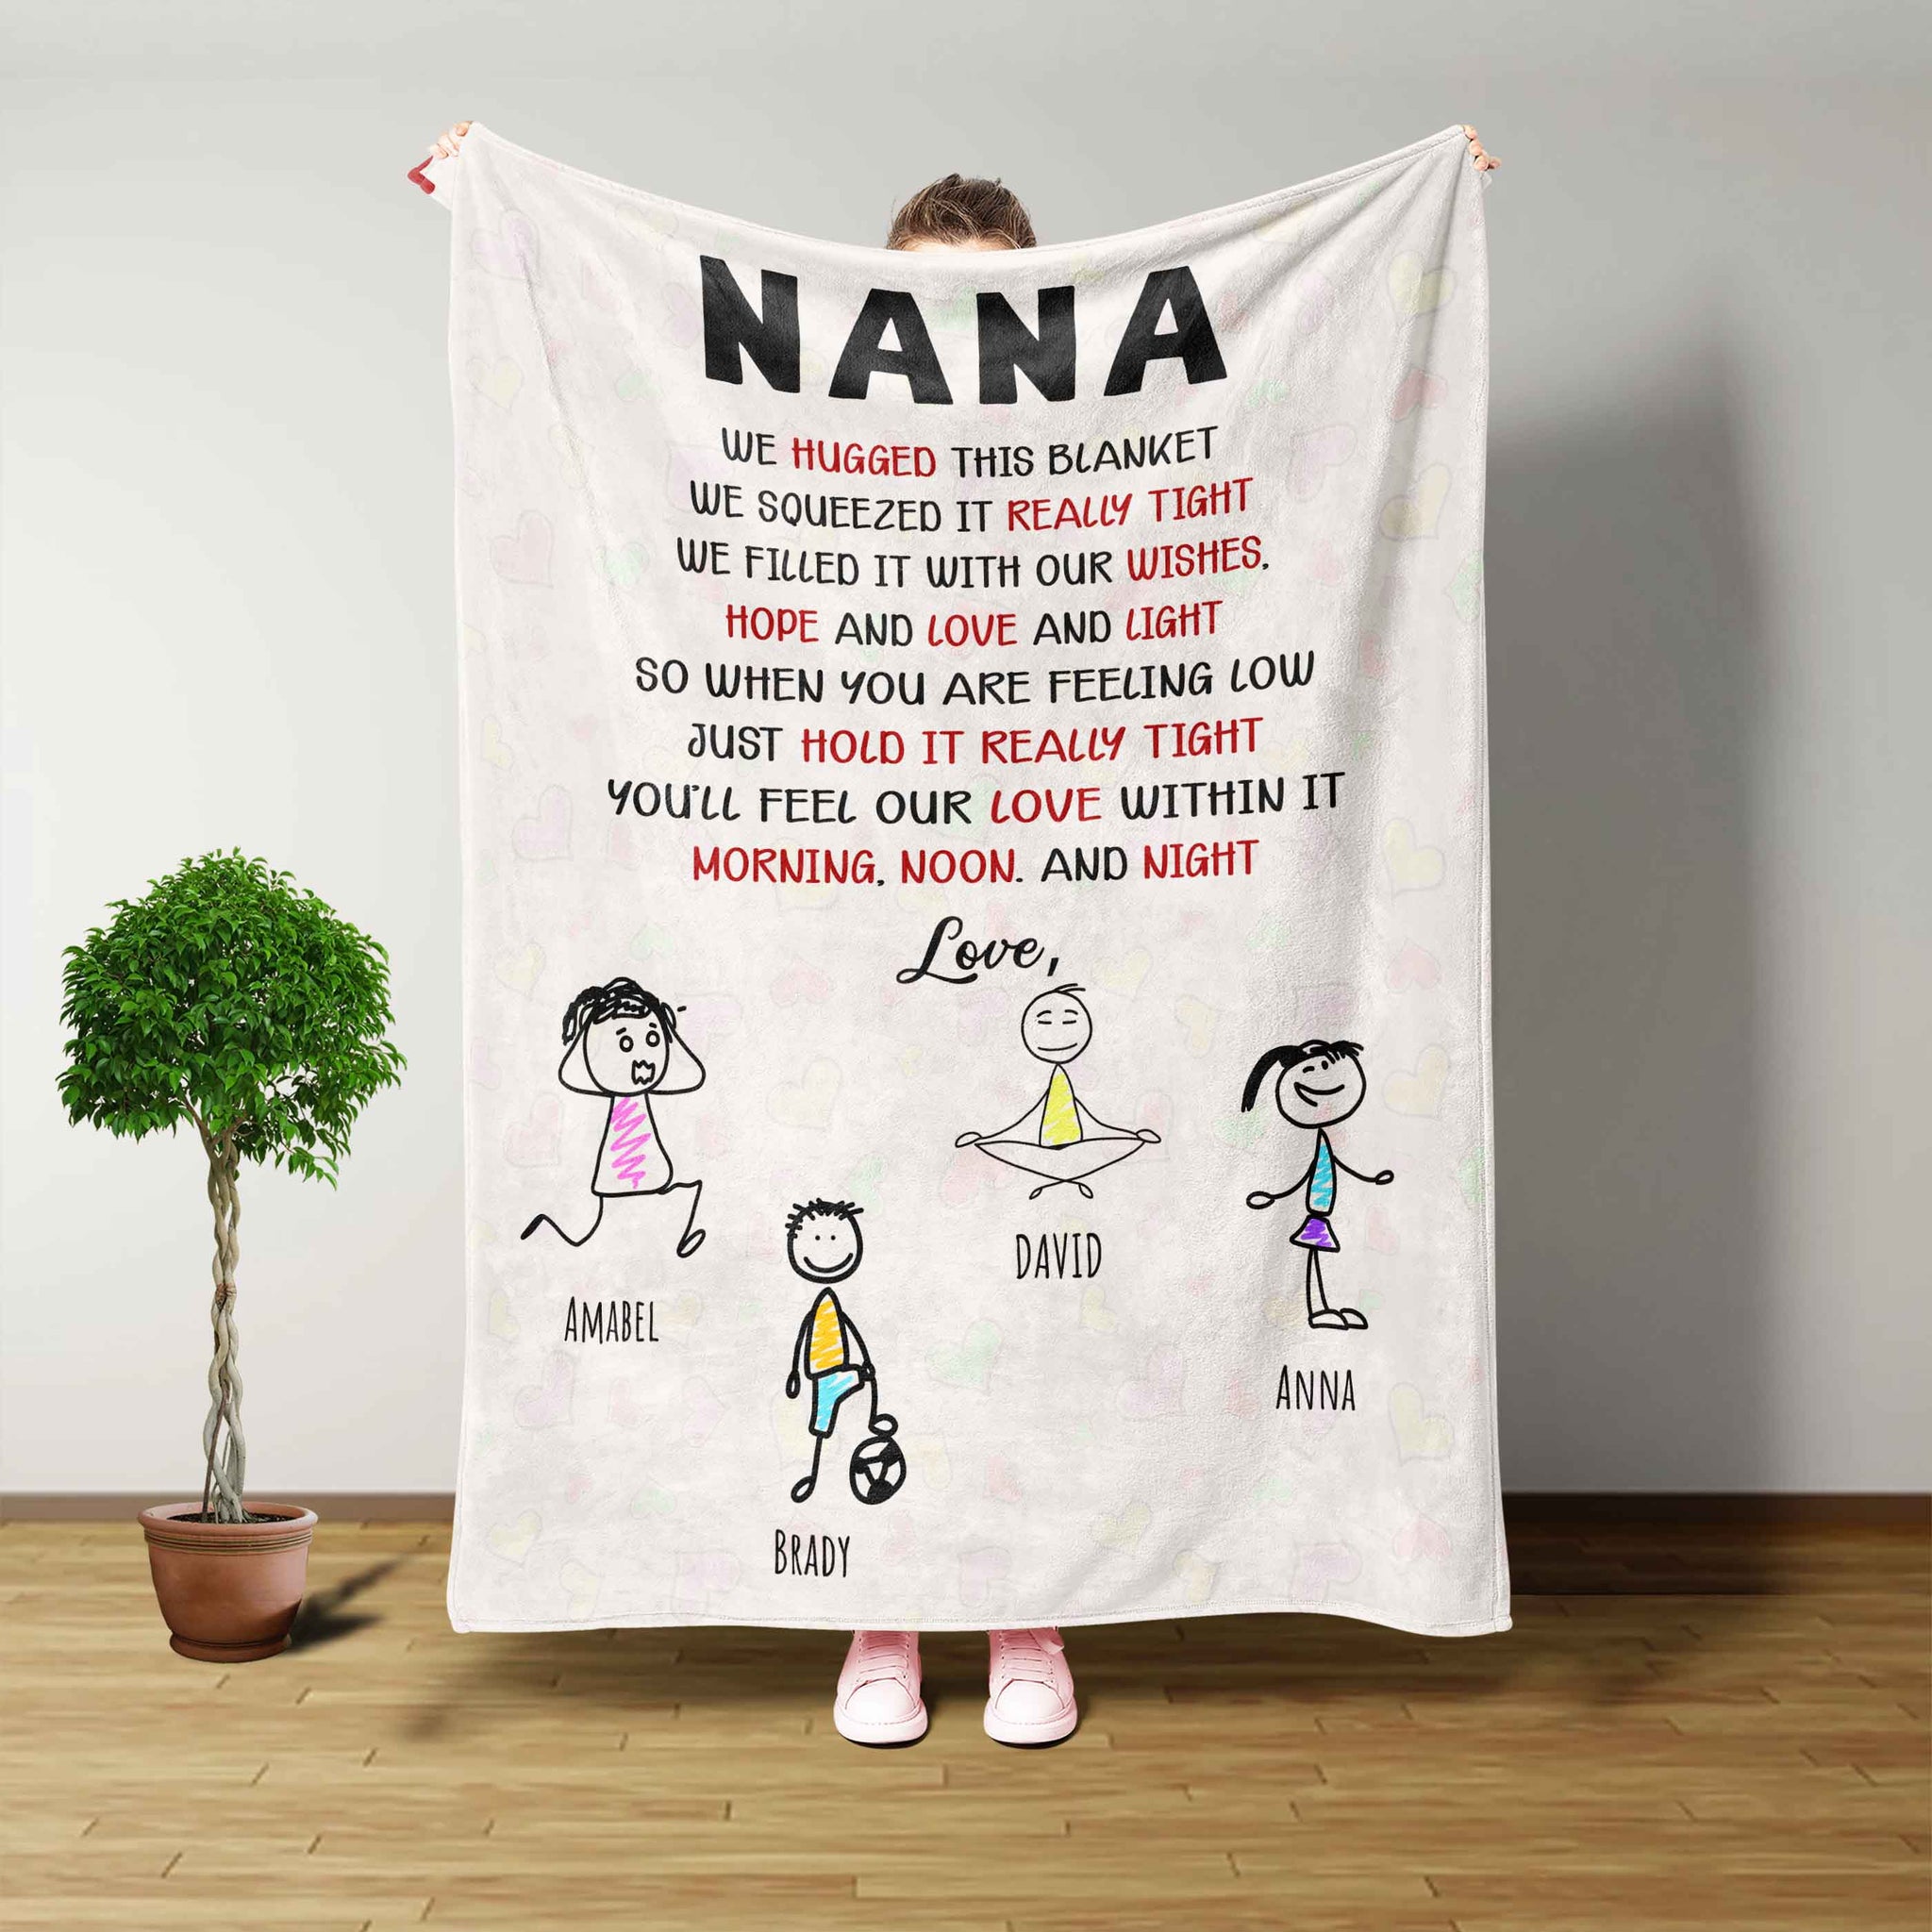 Blanket Customized, Nana We Hugged This Blanket, Grandma Gifts, Stick Figure, Decor For Bedroom, Birthday Gifts For Women, Throw Blanket